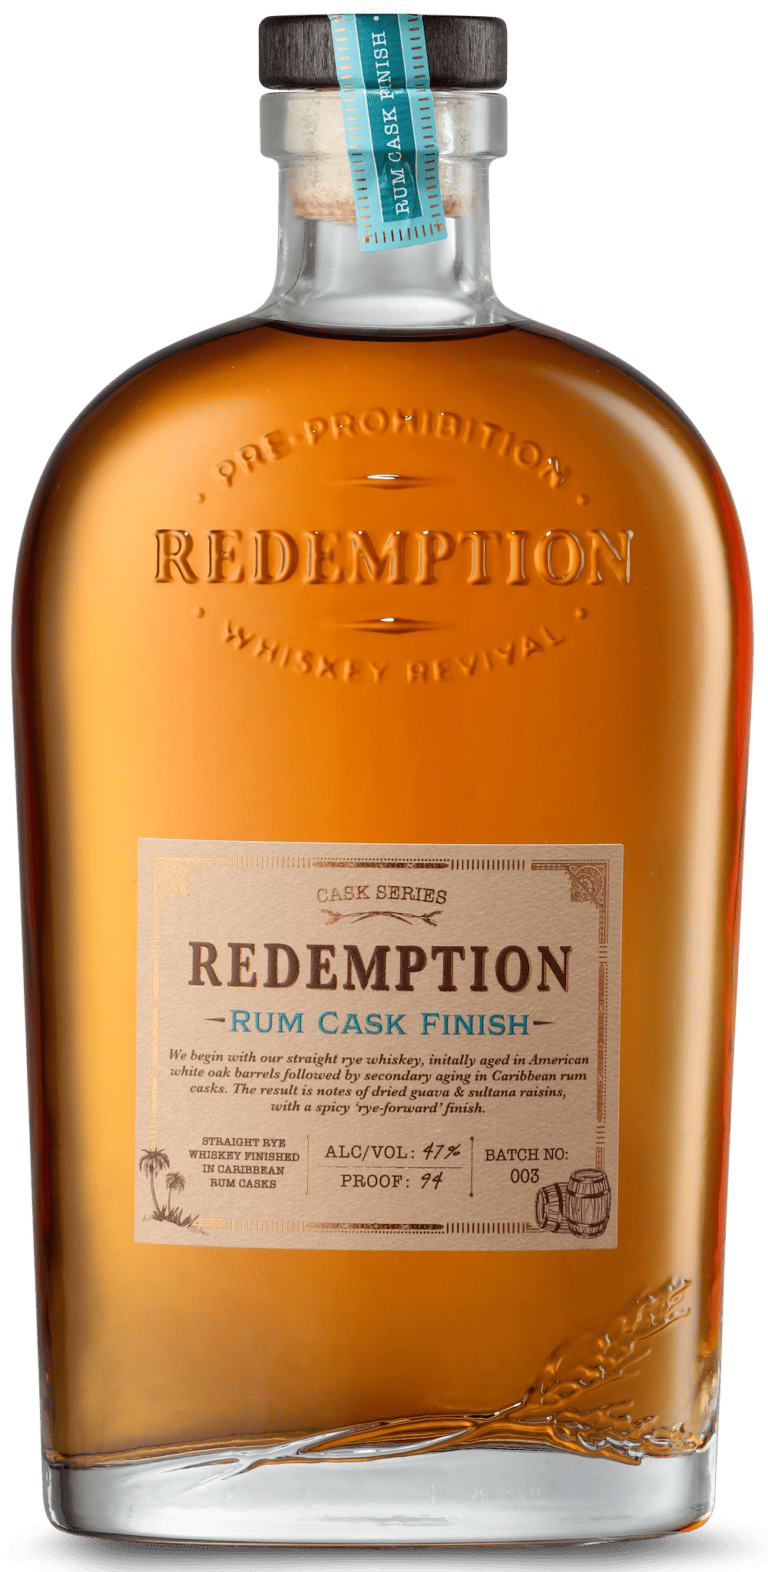 Redemption Rum Cask Finish rye whiskey bottle - Redemption Whiskey